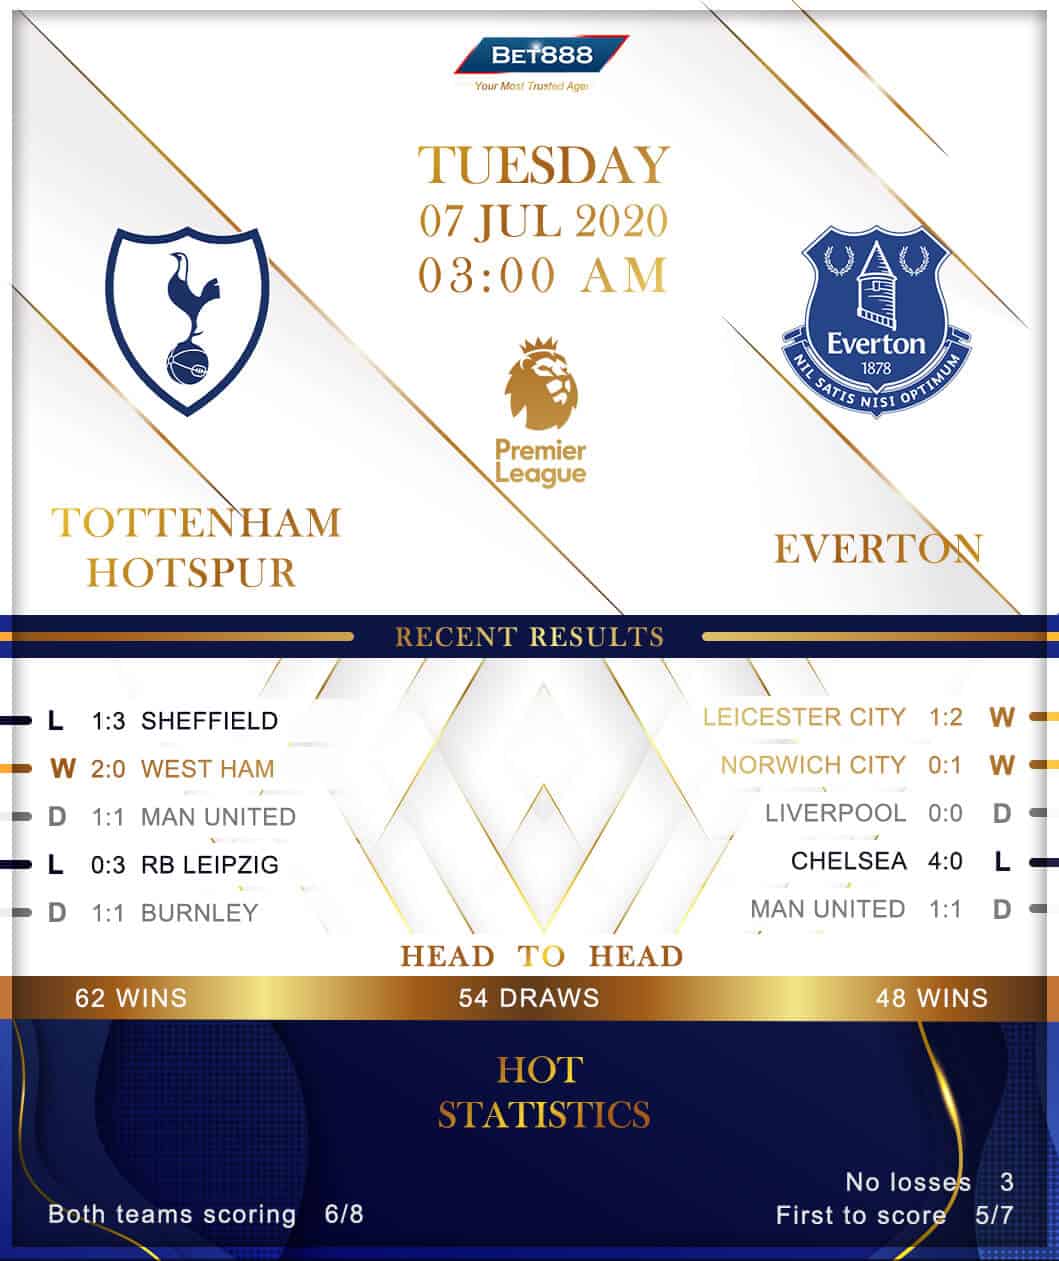 Tottenham Hotspur vs Everton 07/07/20